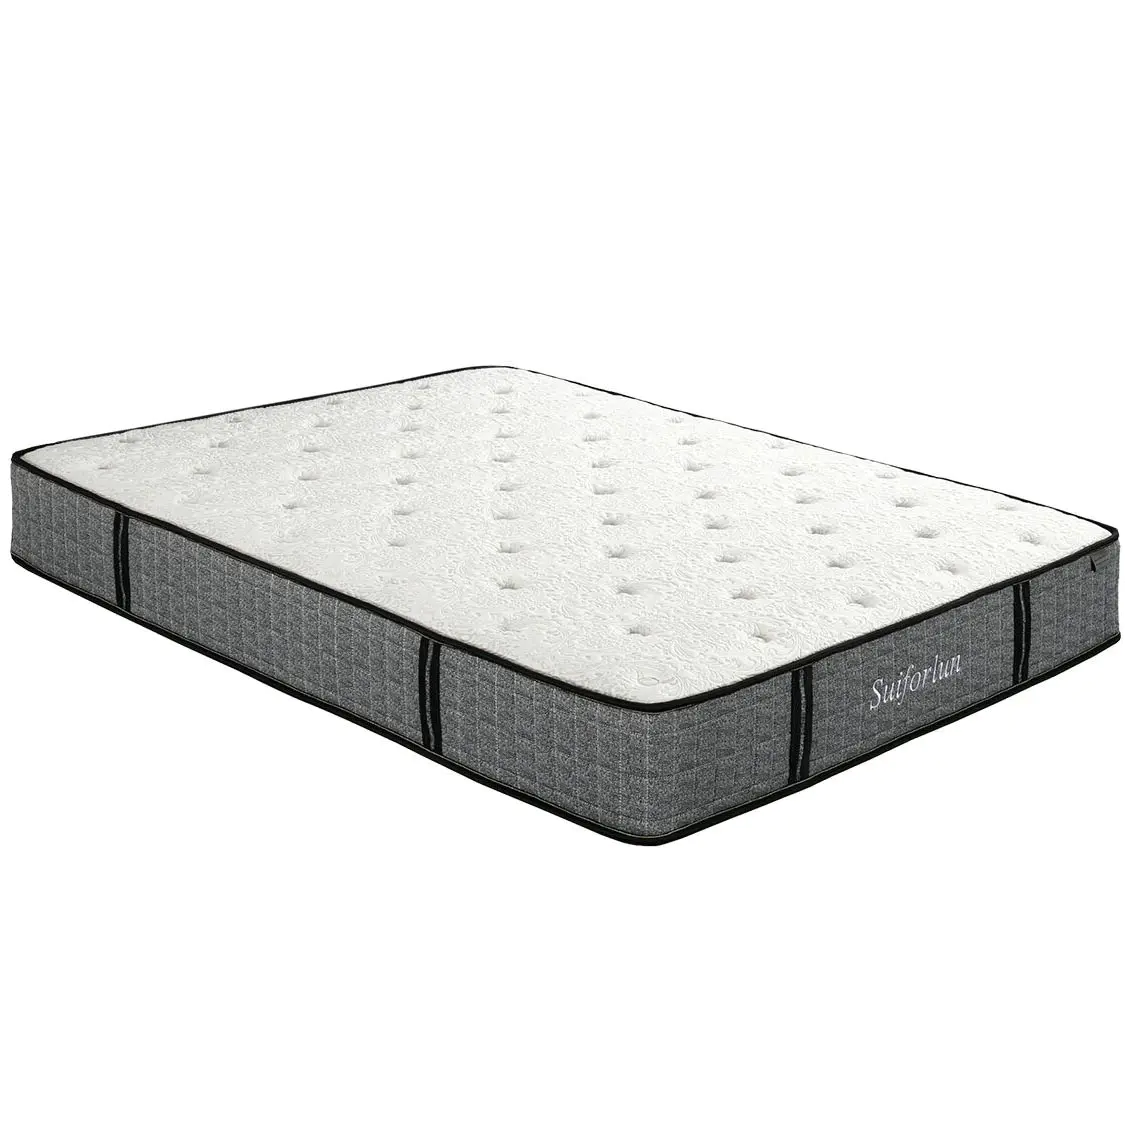 comfortable hybrid mattress 12 inch manufacturer for hotel